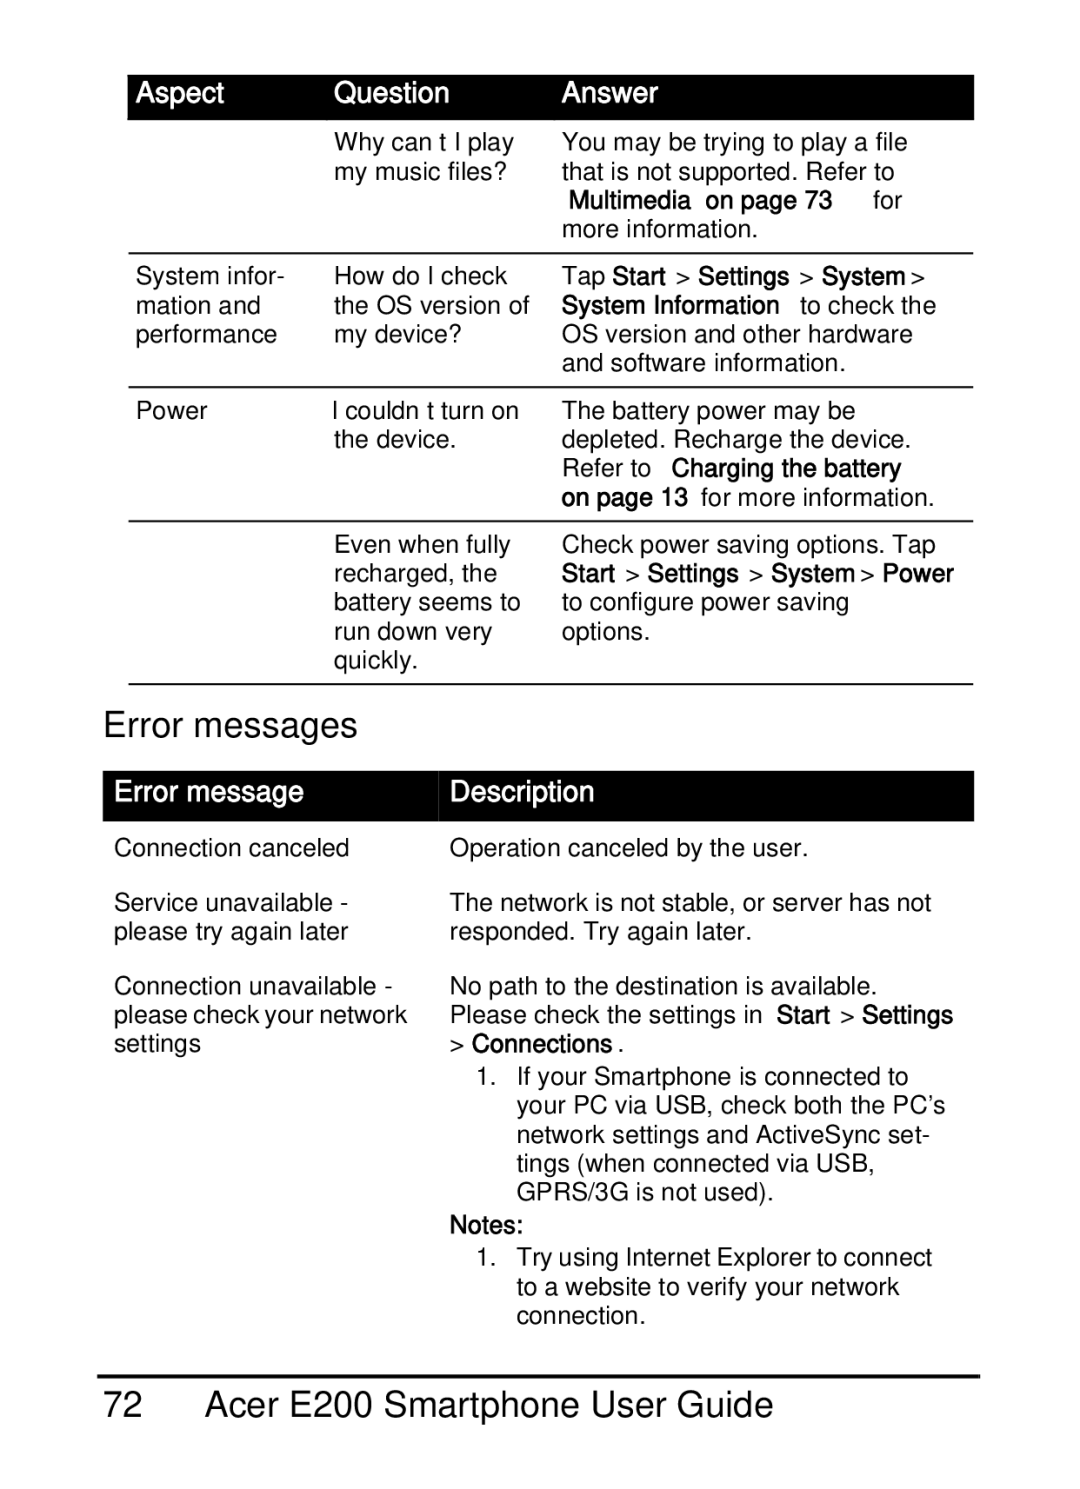 Acer E200 manual Error messages, Error message Description 